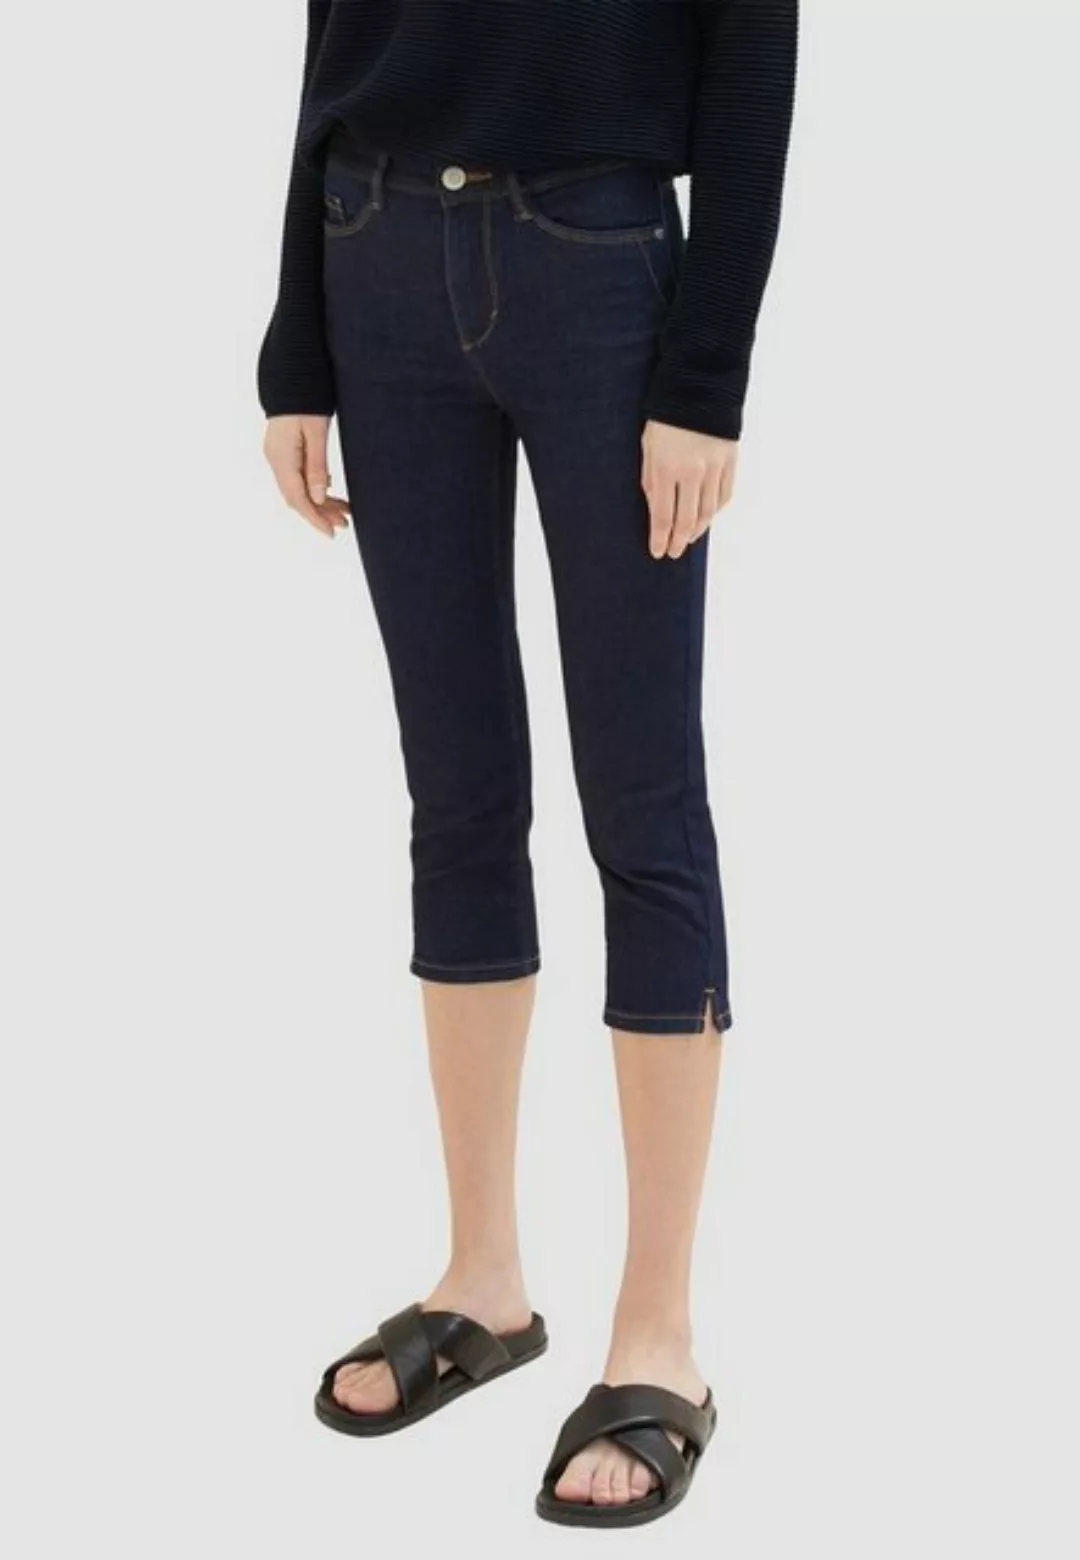 TOM TAILOR Caprihose Capri Denim Jeans Shorts KATE SLIM 5314 in Blau günstig online kaufen